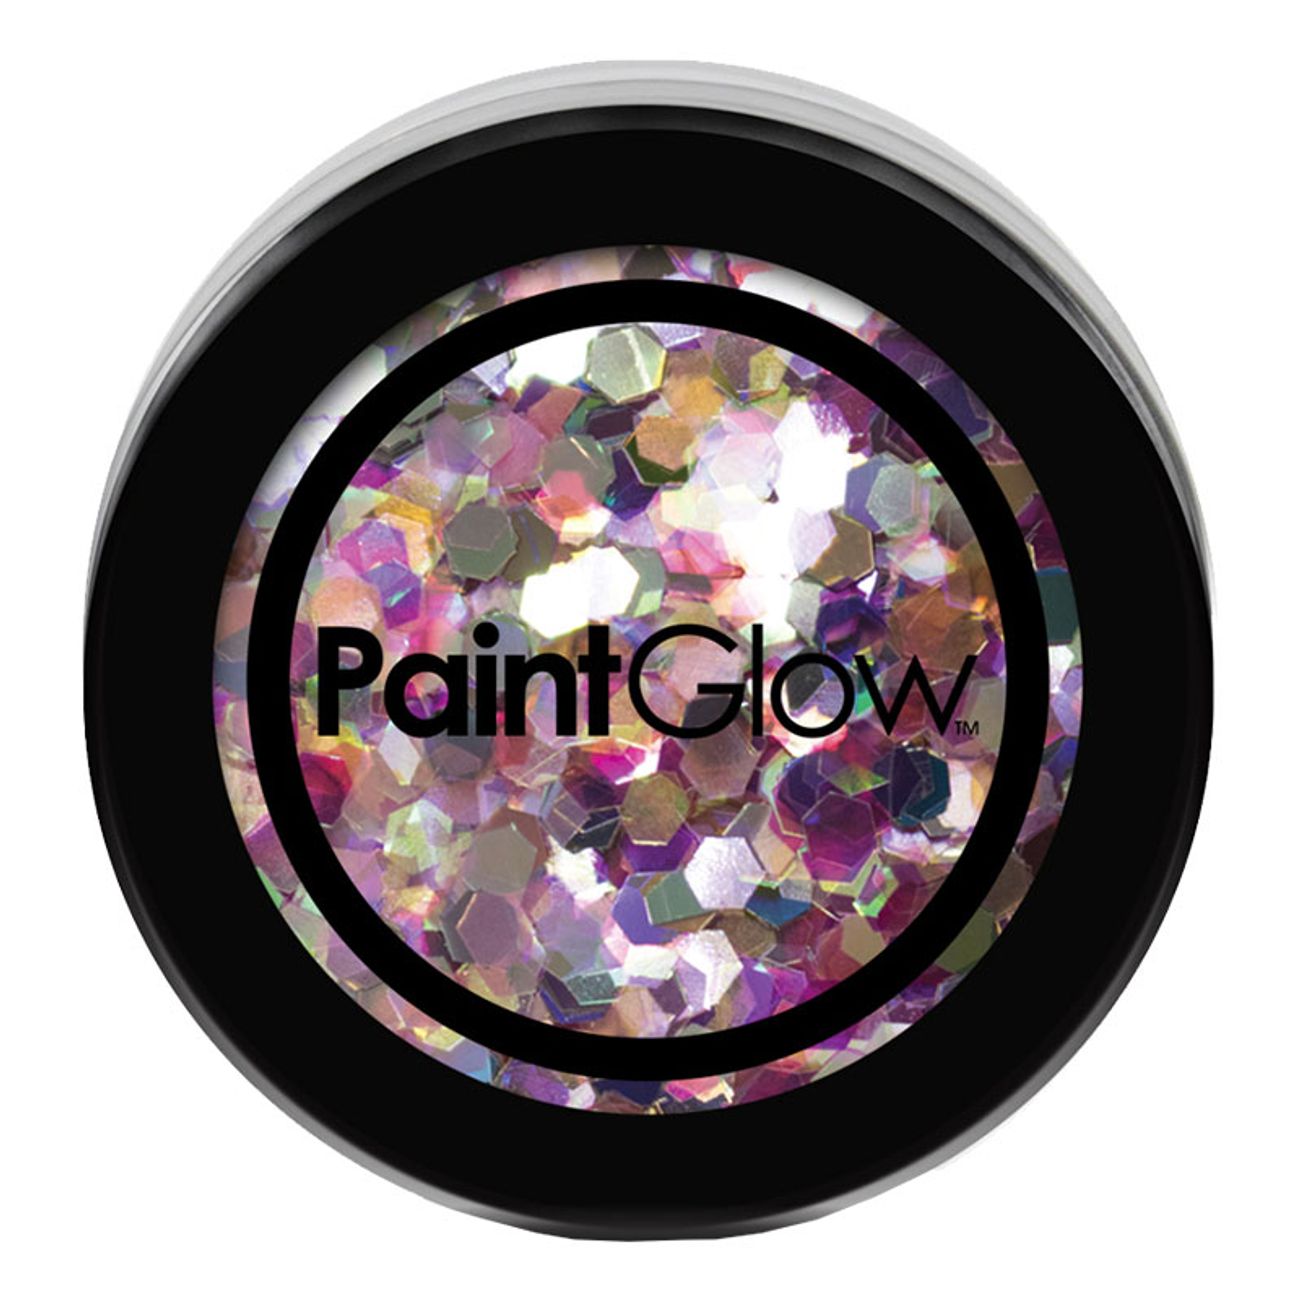 paintglow-holografisk-uv-glittergel-13